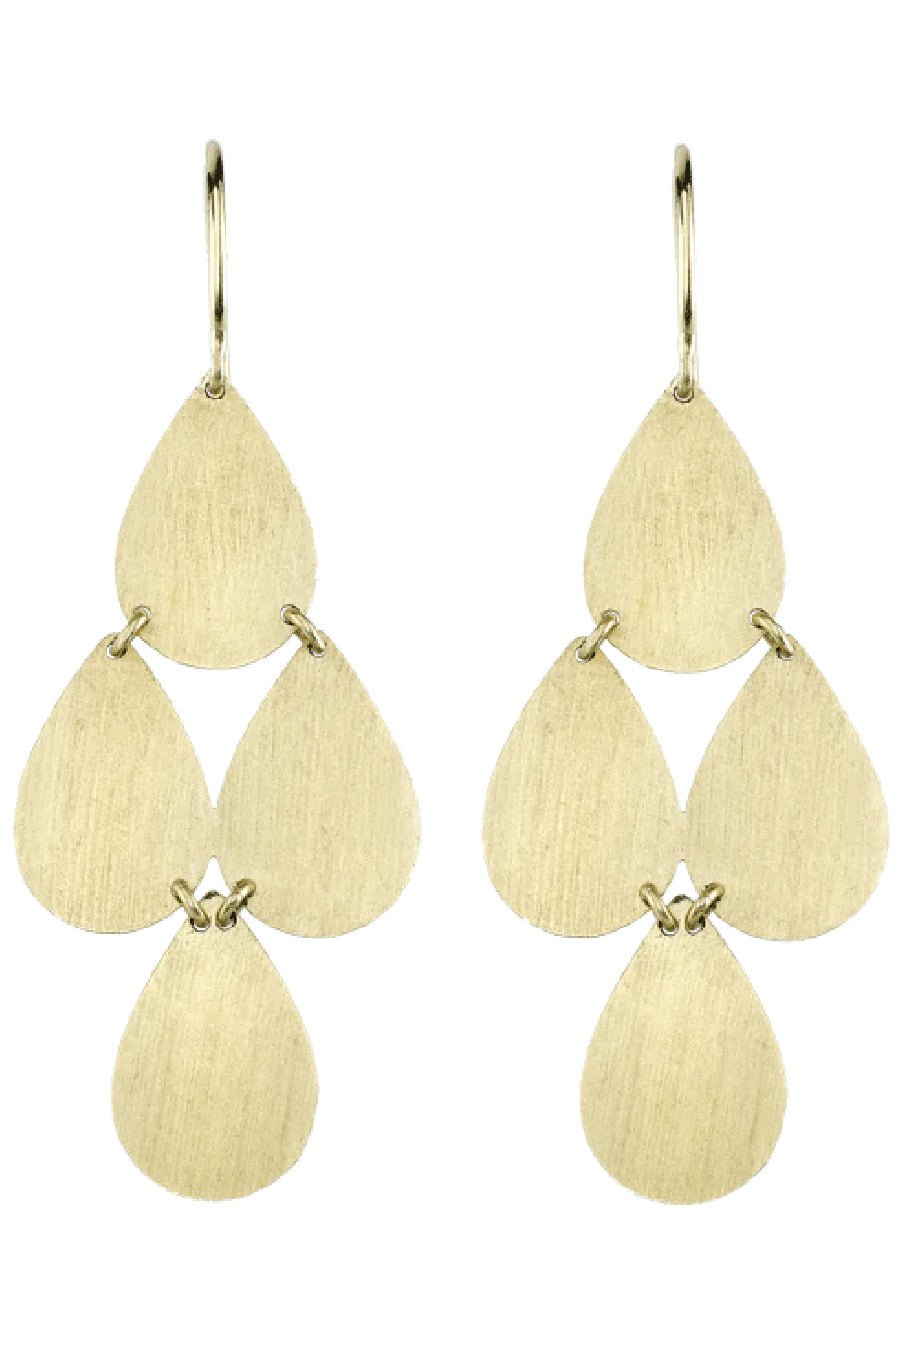 IRENE NEUWIRTH JEWELRY-Four-Drop Chandelier Earrings-YELLOW GOLD